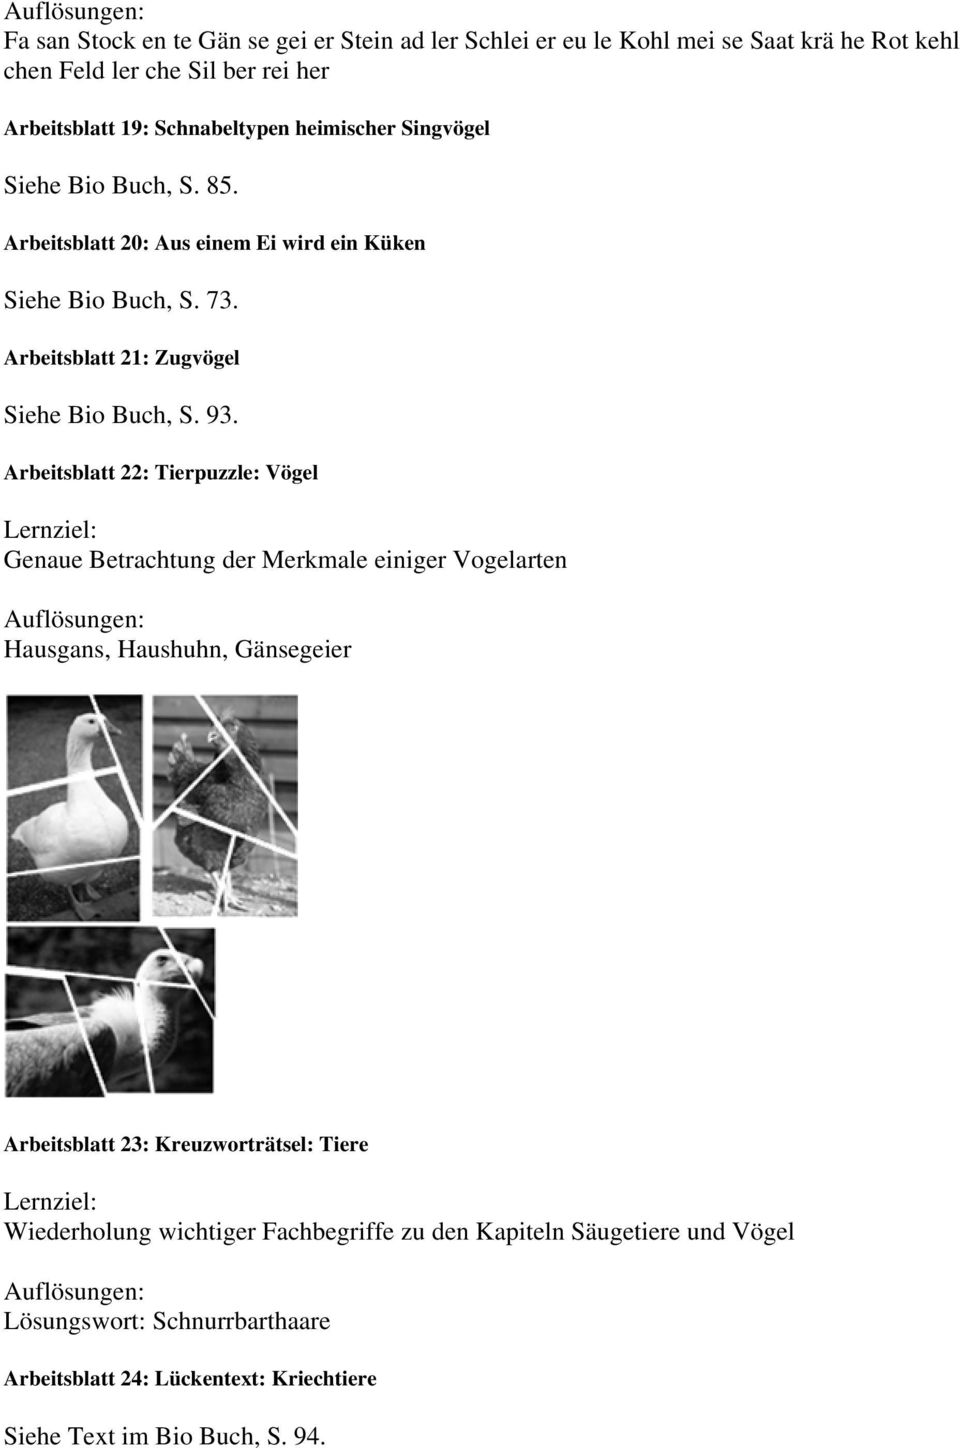 Arbeitsblatt 22: Tierpuzzle: Vögel Genaue Betrachtung der Merkmale einiger Vogelarten Hausgans, Haushuhn, Gänsegeier Arbeitsblatt 23: Kreuzworträtsel: Tiere